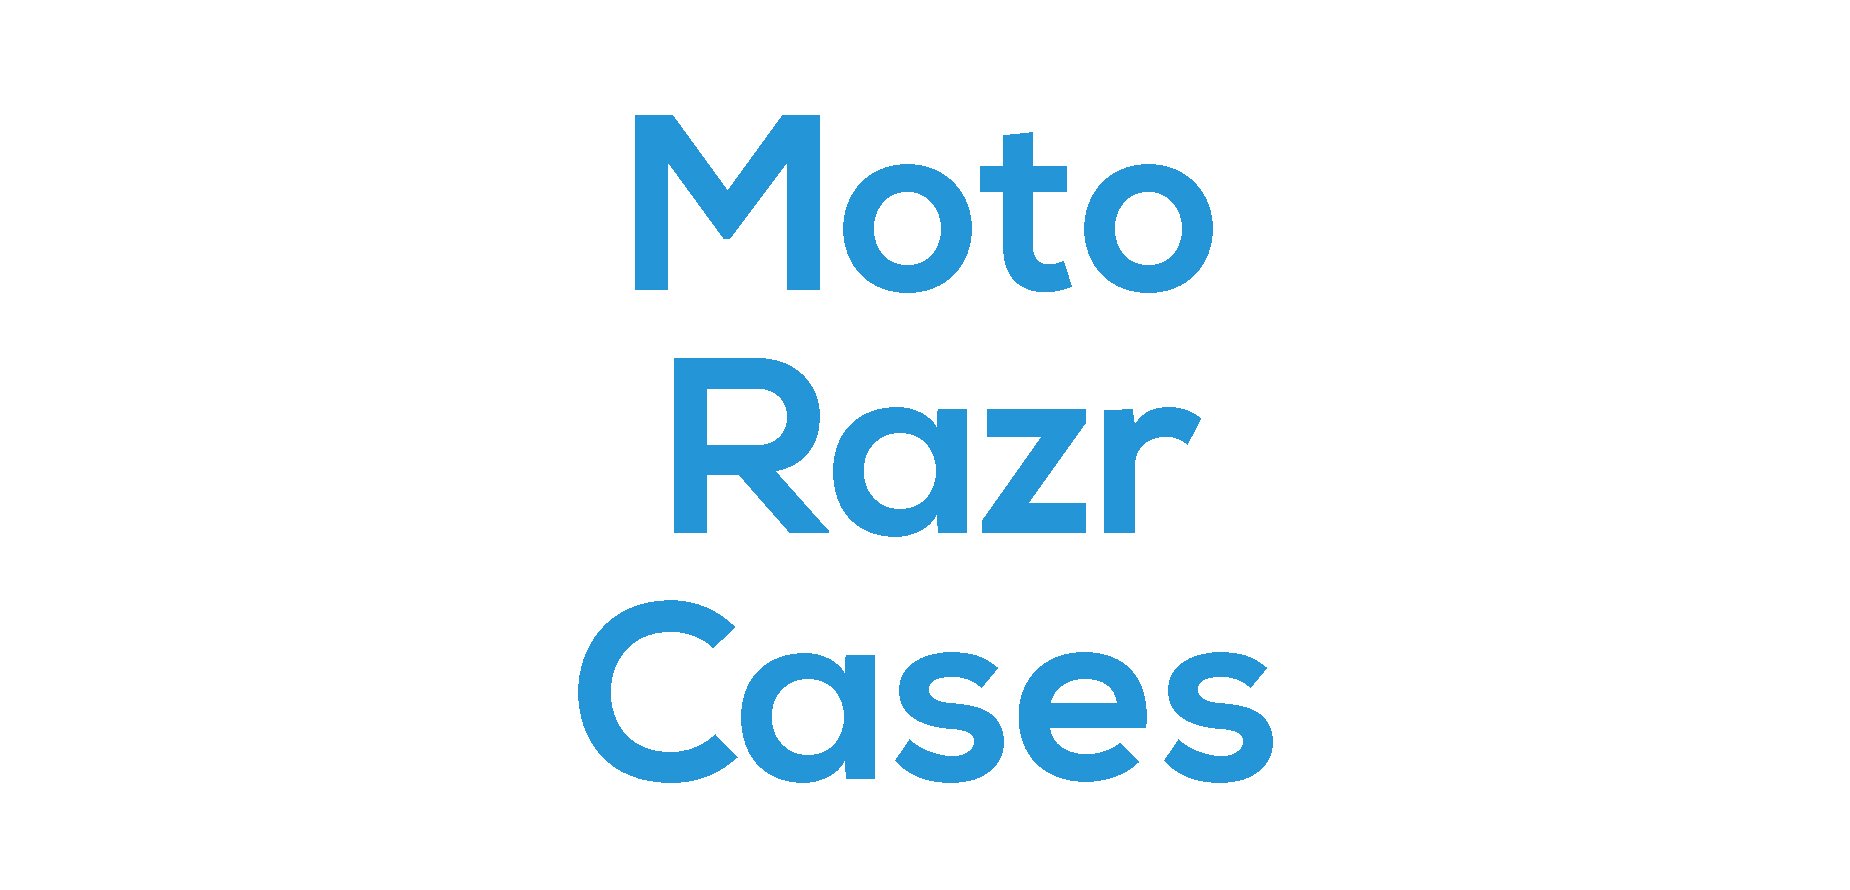 Moto Razr Cases